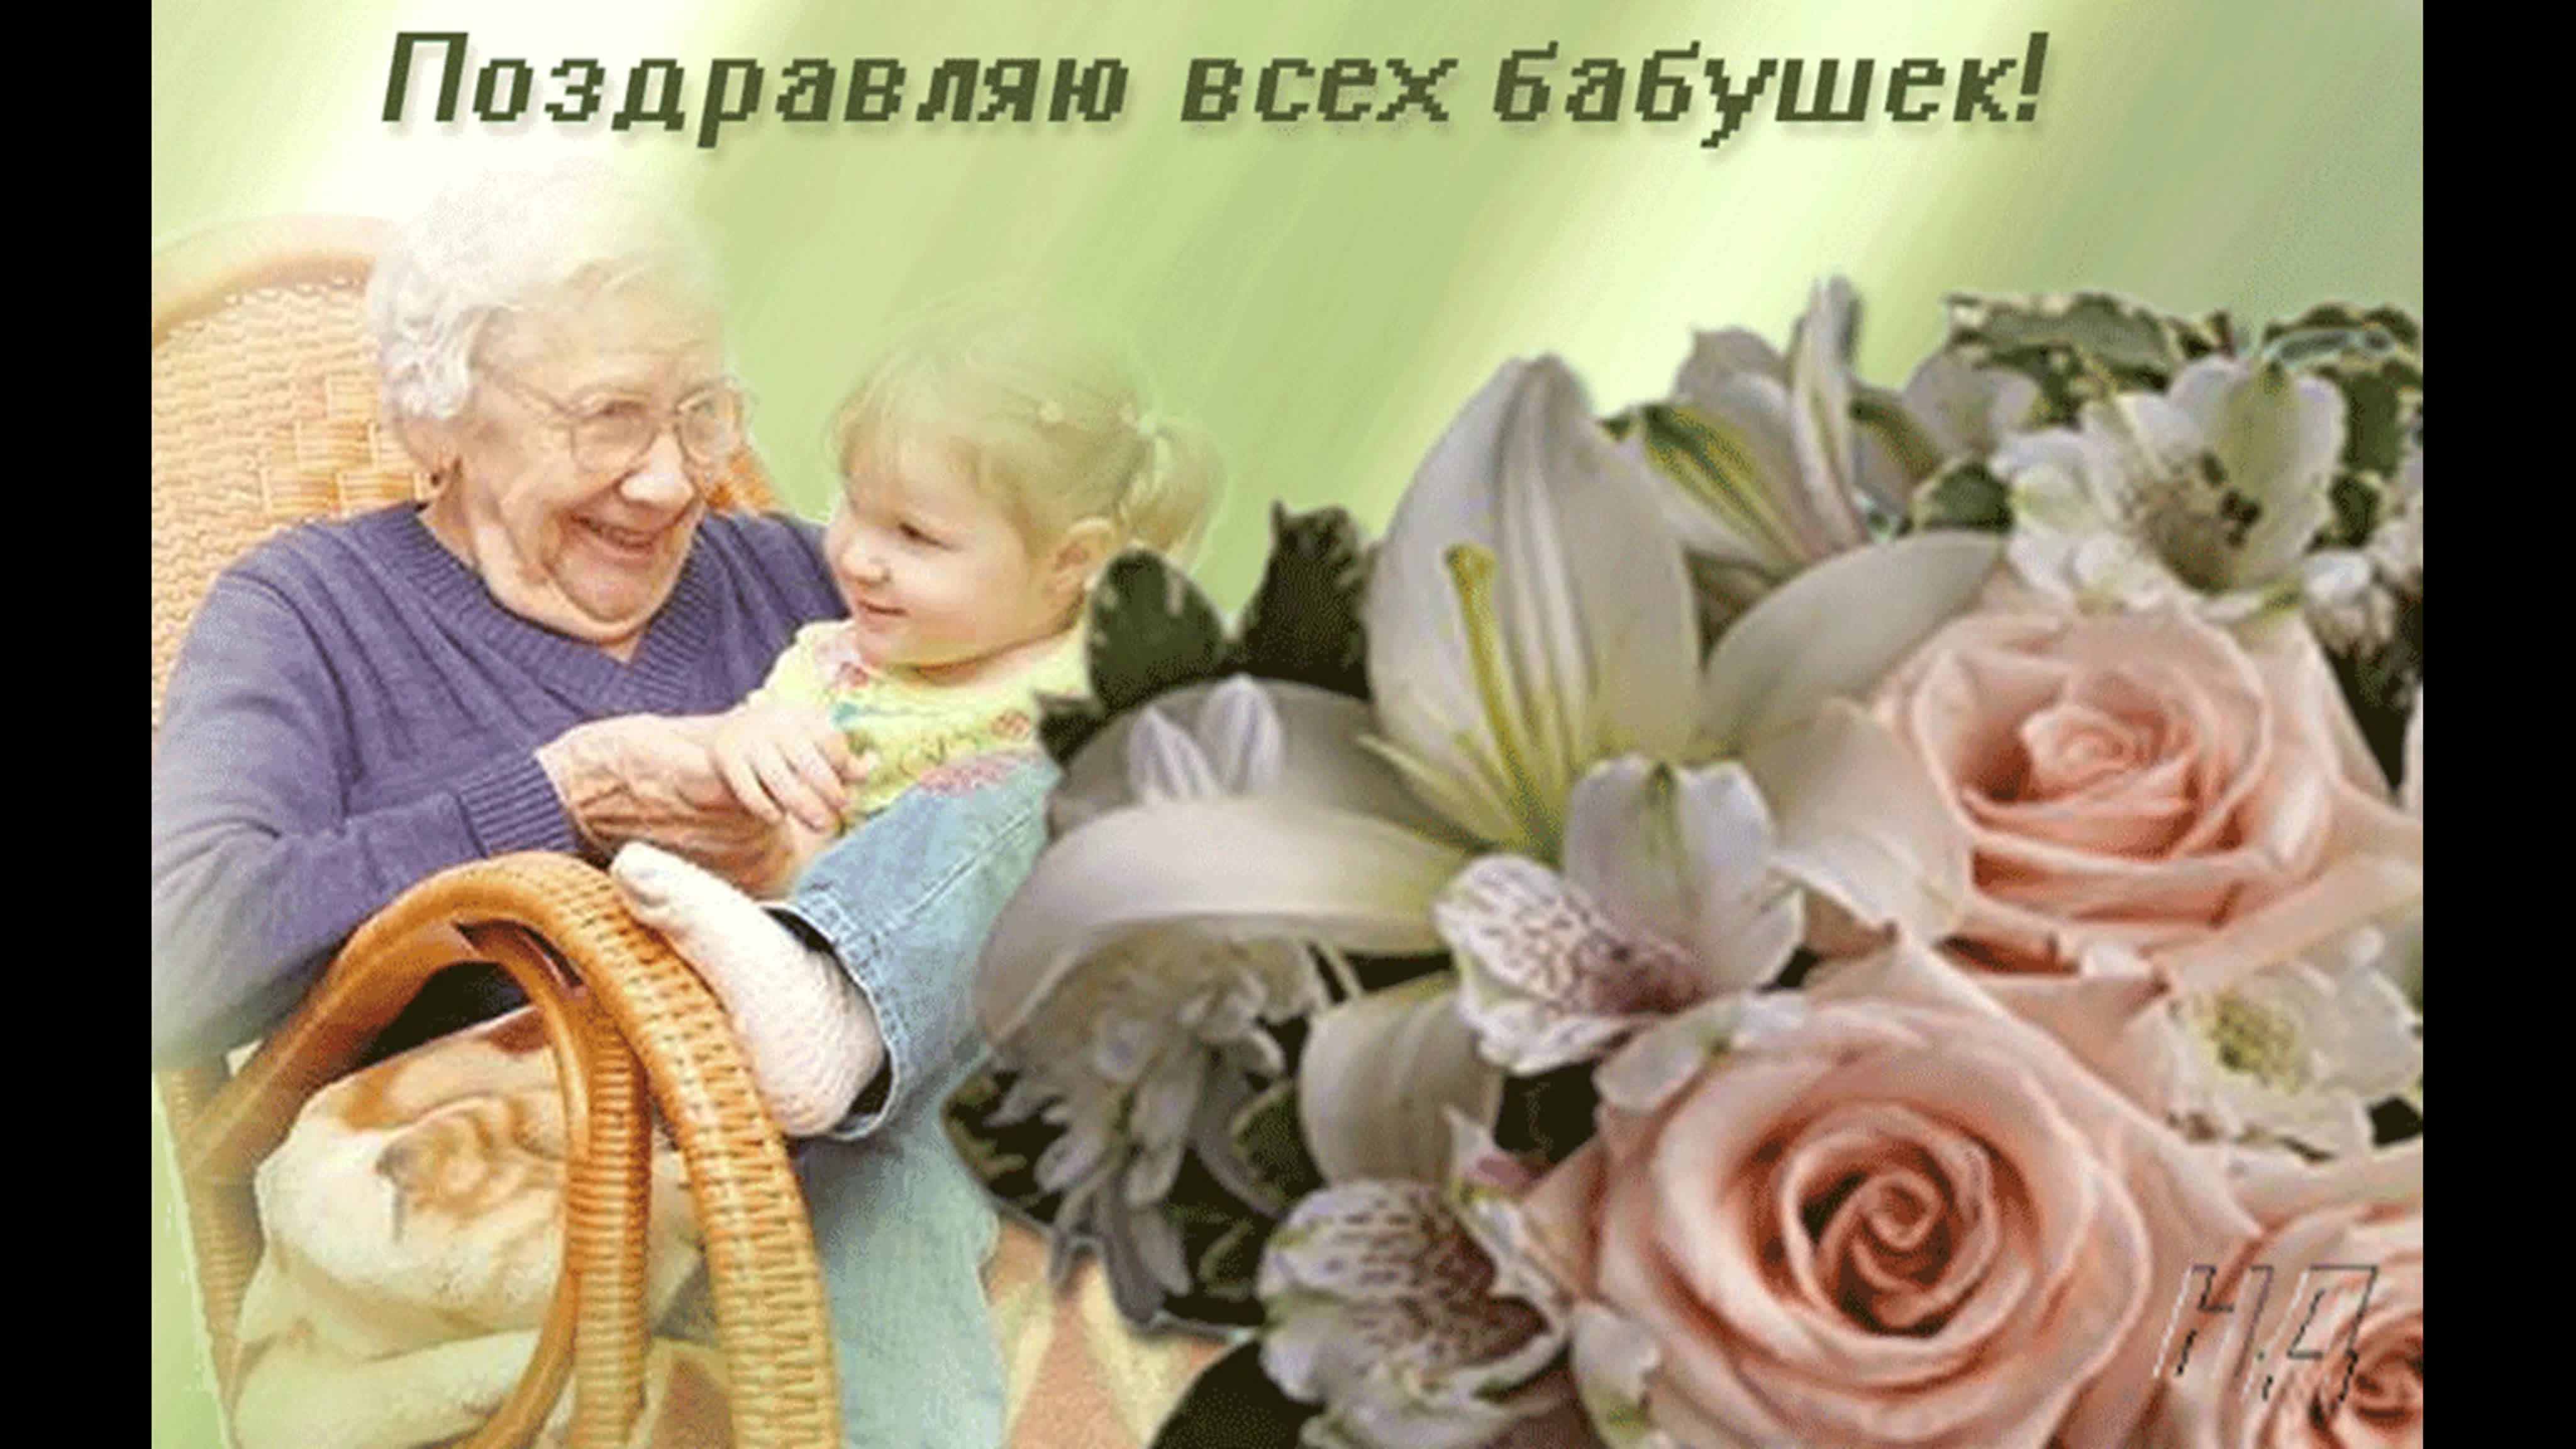 Дети поздравляют бабушек. С днём бабушек поздравления. Открытки с днём бабушек. С днём бабушки поздравления красивые. Поздравление бабушке с днем бабушек.